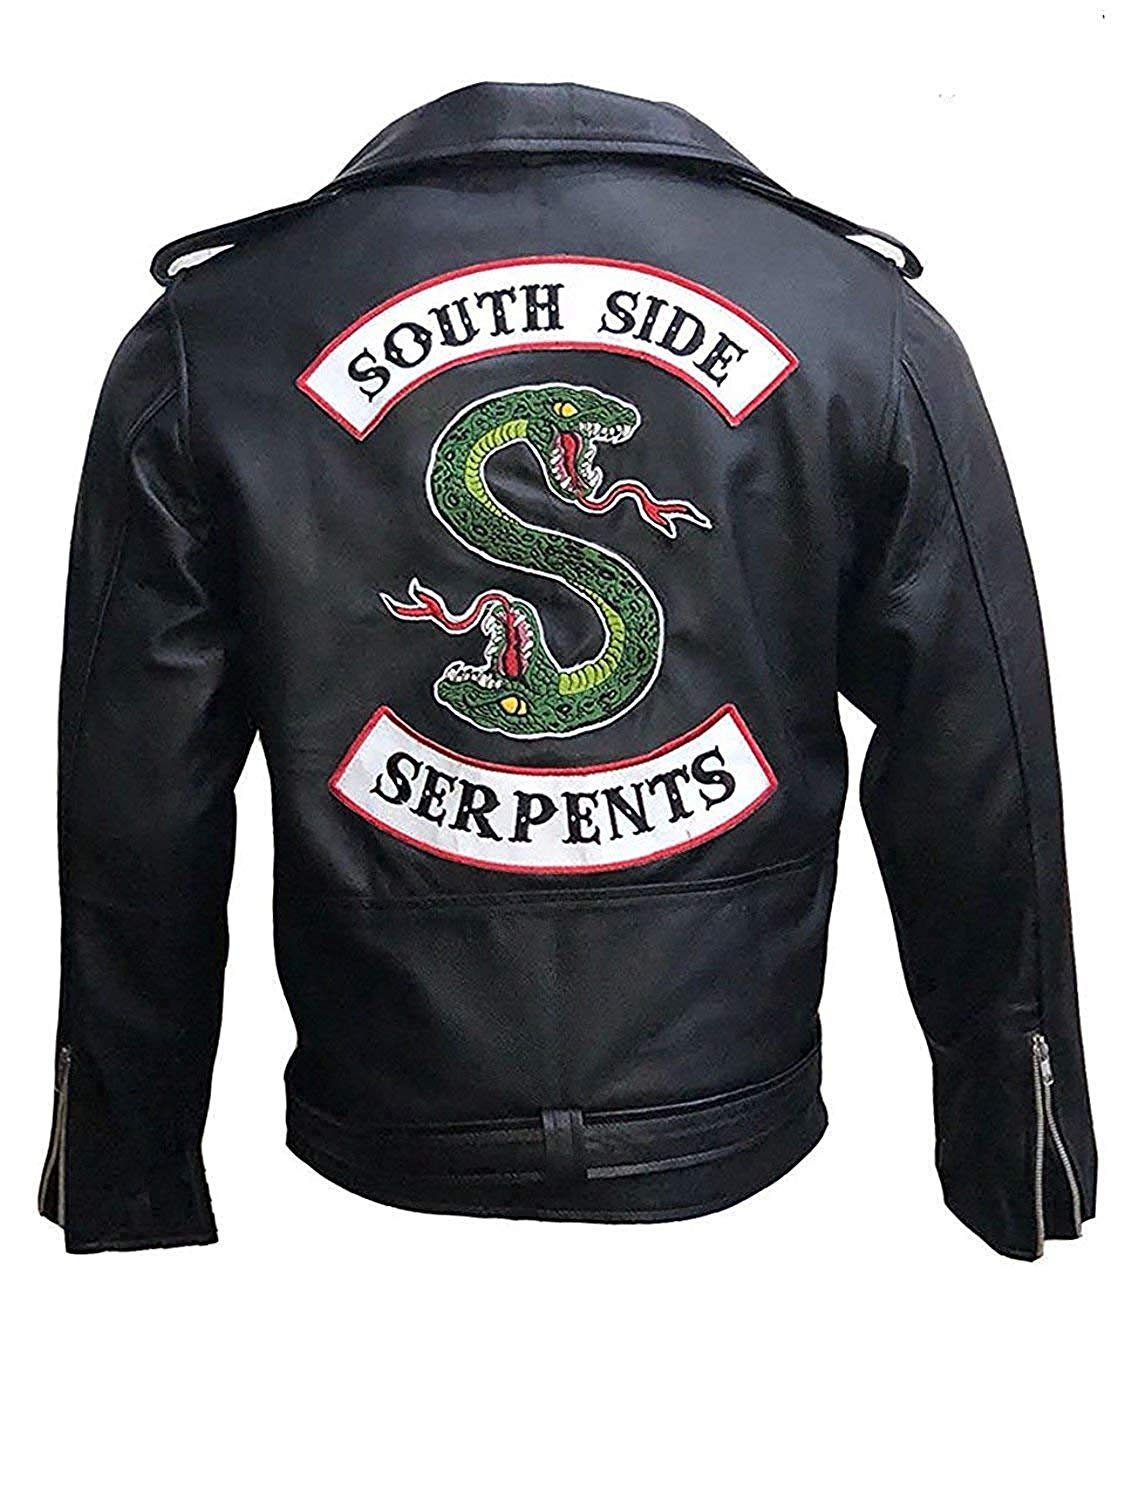 Southside Serpents Jacket - Etsy